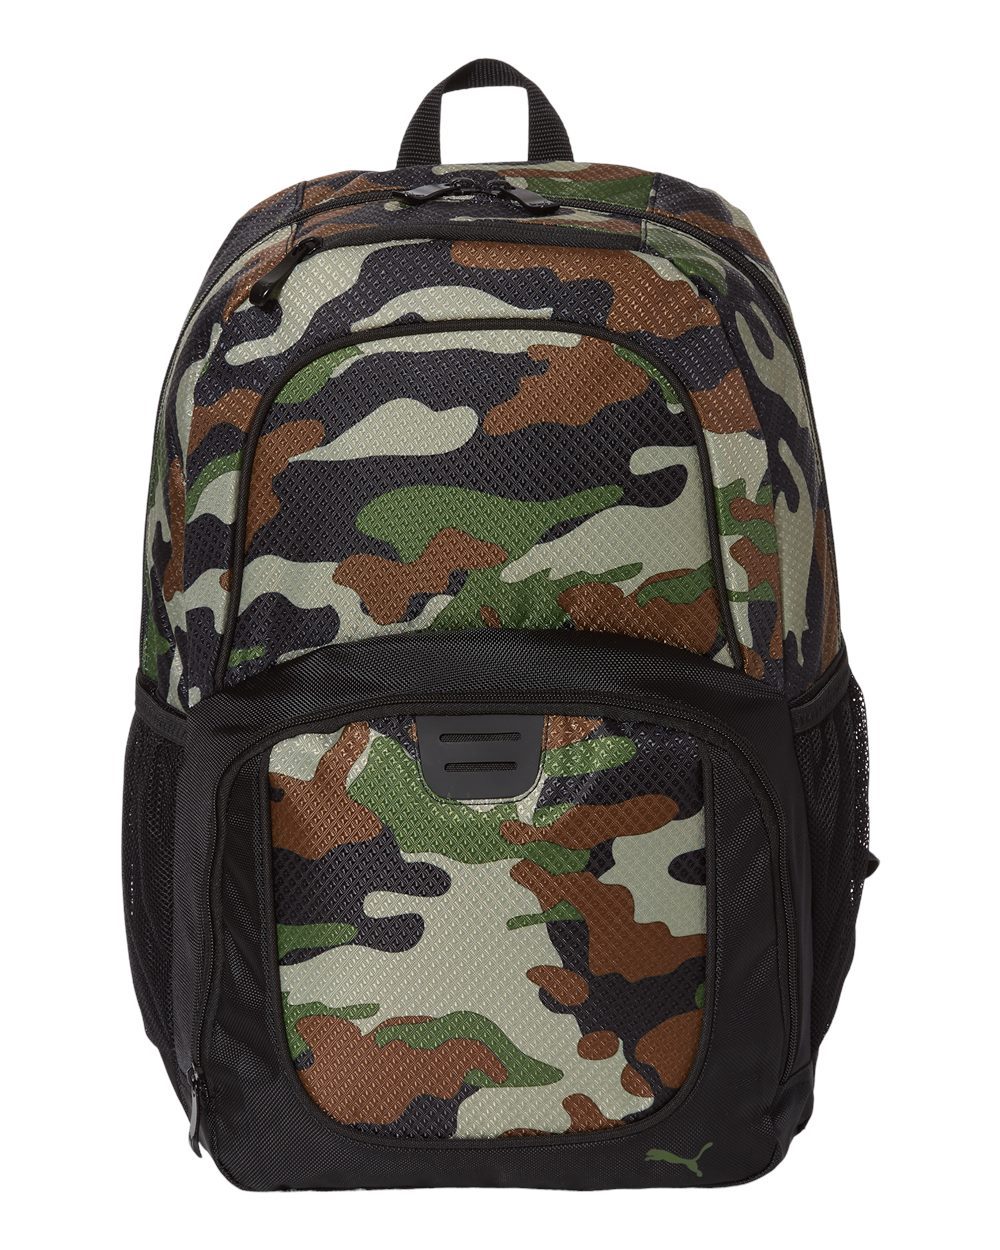 Puma - 25L Backpack - PSC1028 - Dark Grey/ Black - Size: One Size - image 2 of 3